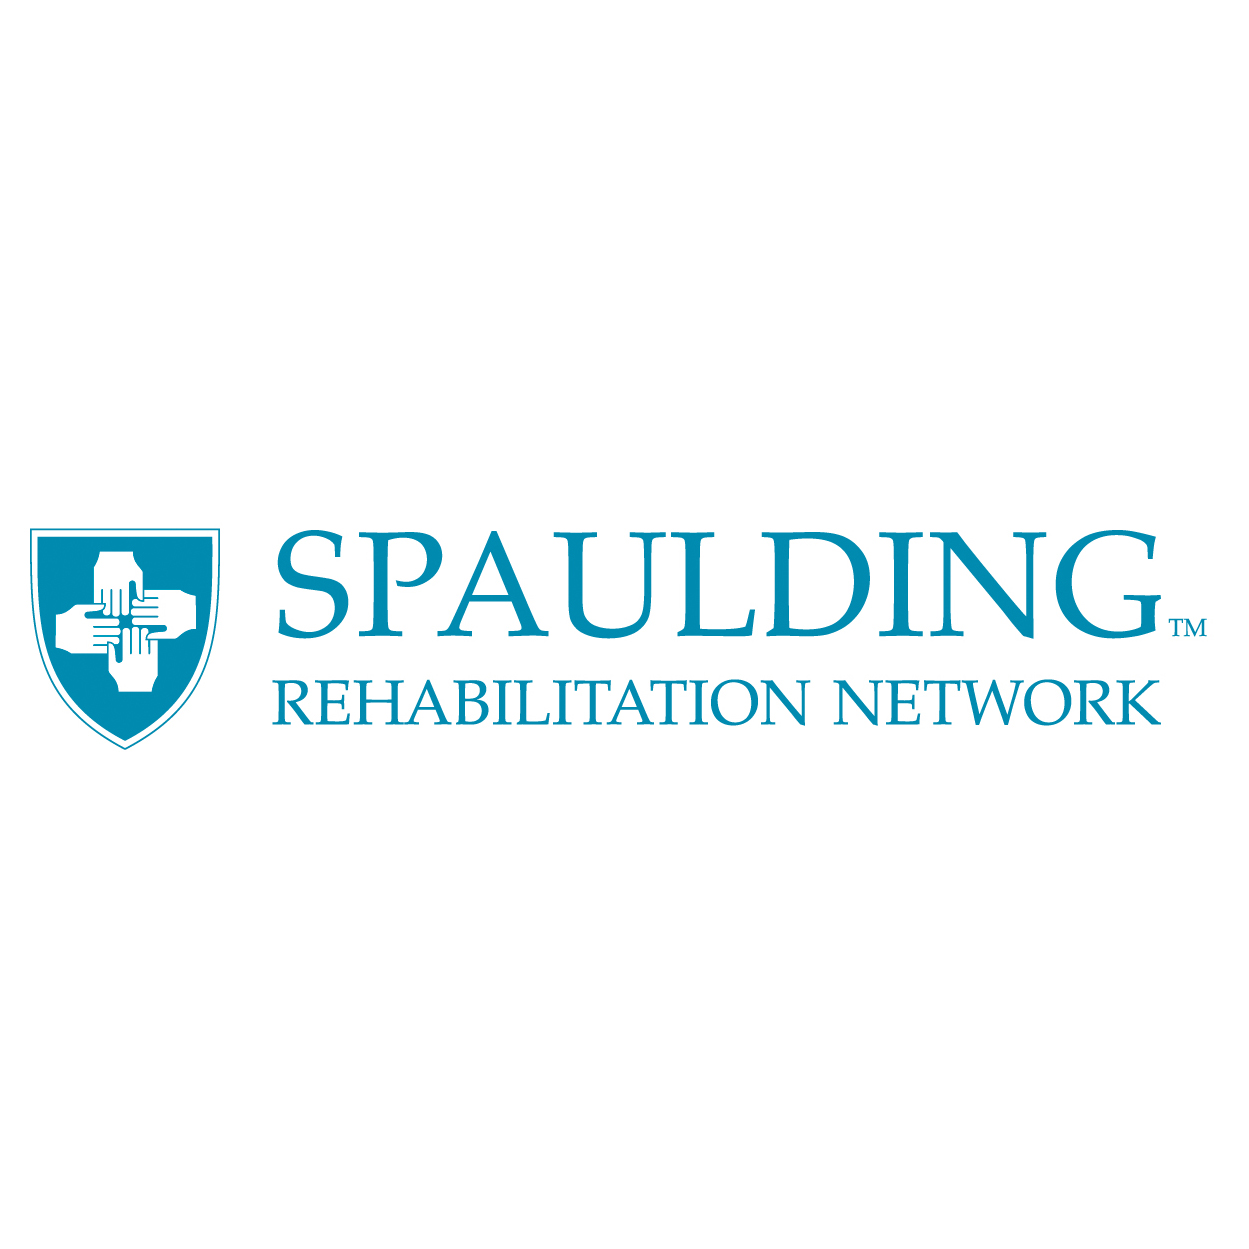 Sitio web de rehabilitación de Spaulding